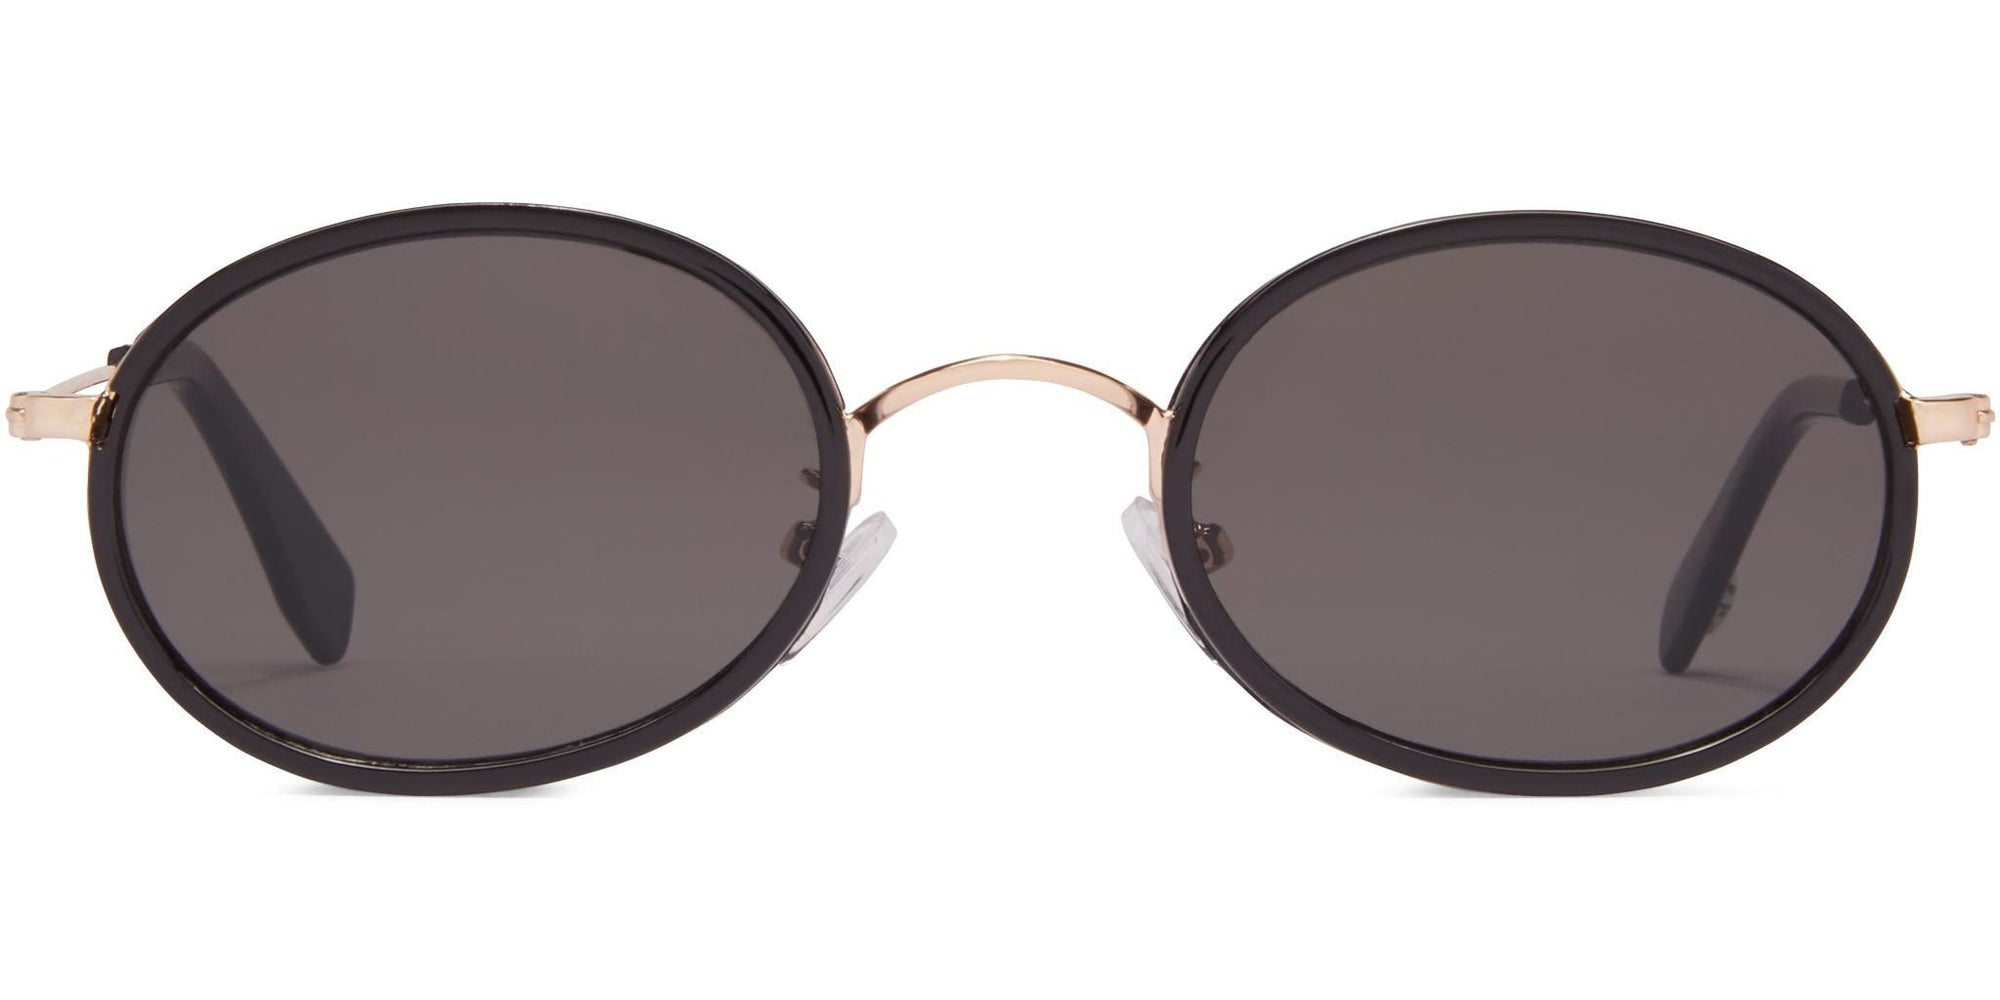 Tropea - Black - Sunglasses